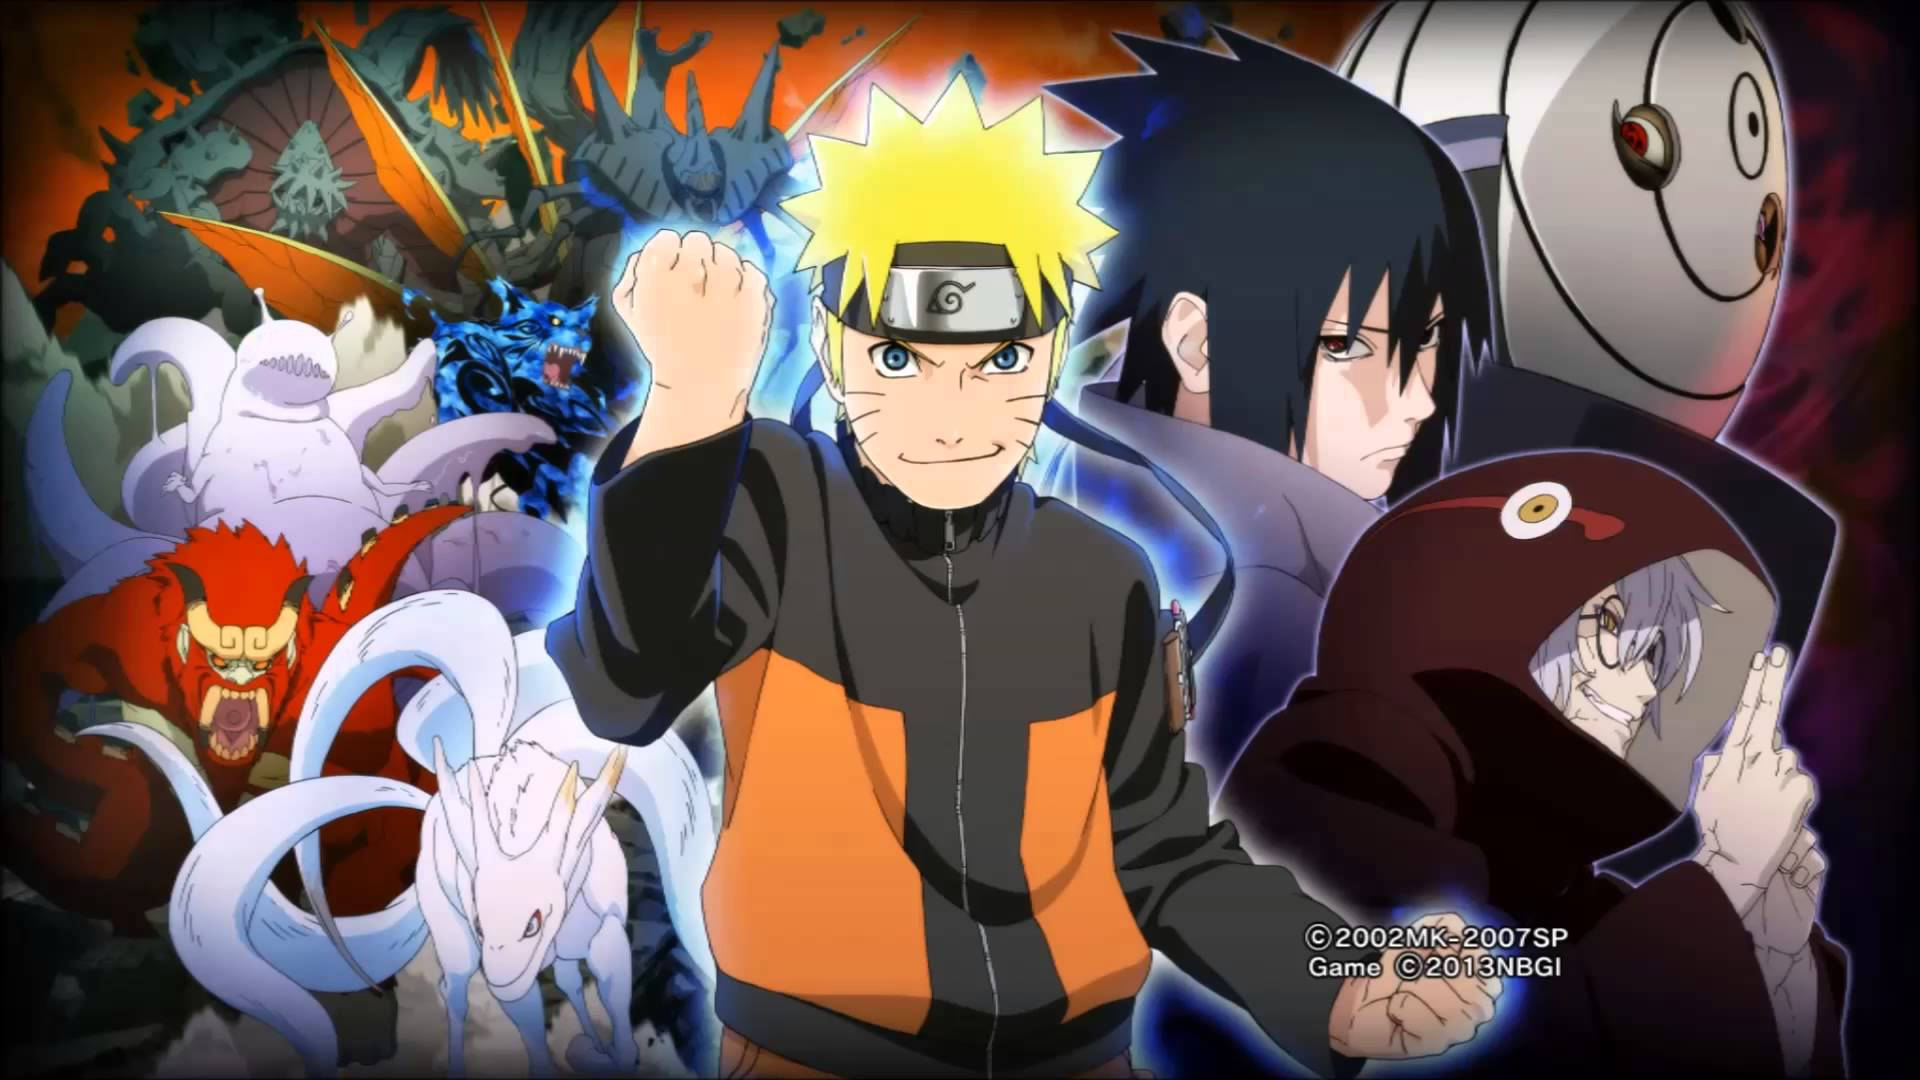 Naruto Shippuden Pc Background